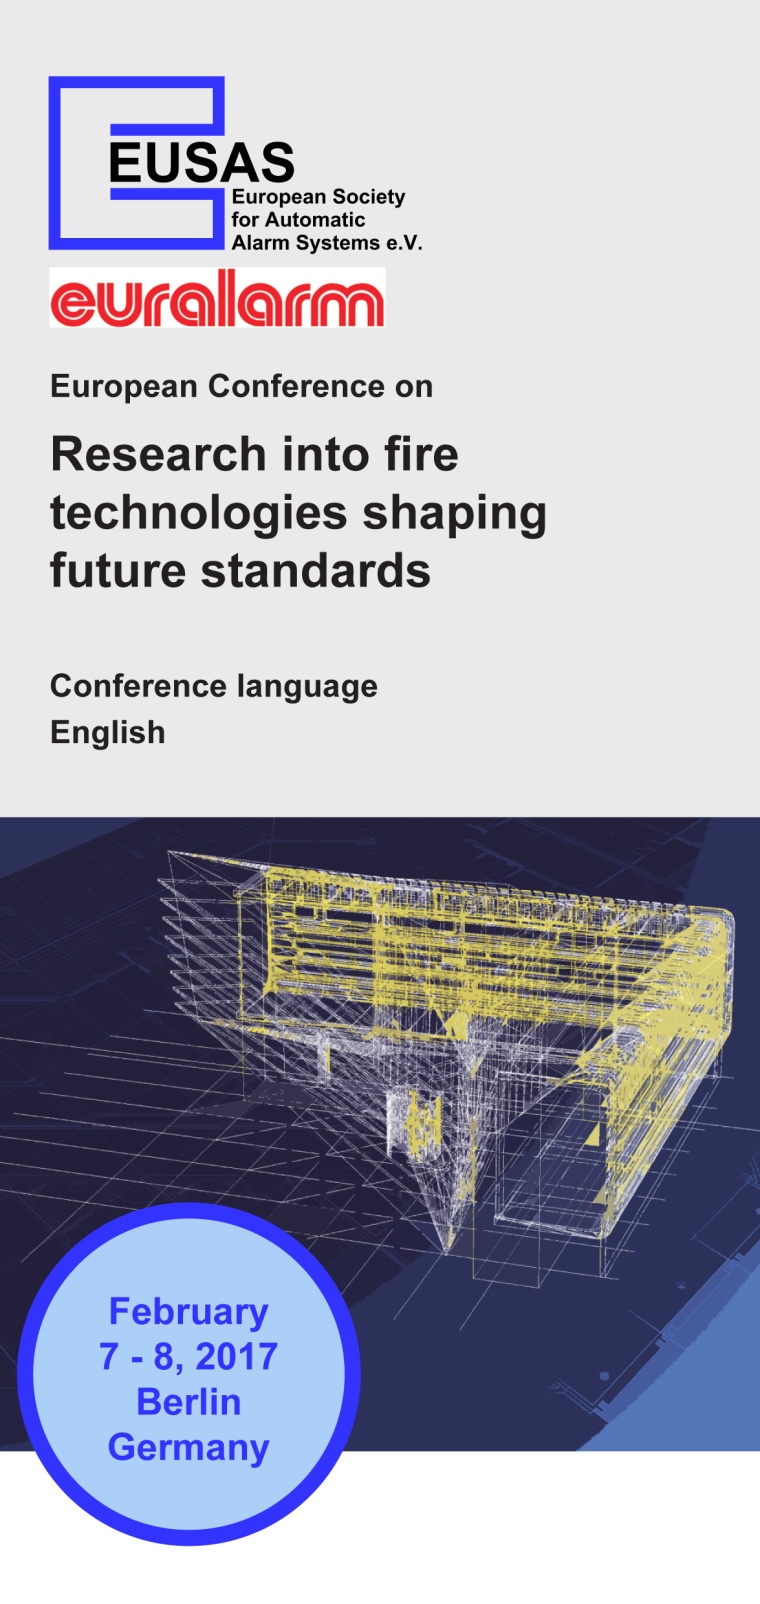 Euralarm and Eusas organise a European Conference on Fire Technologies